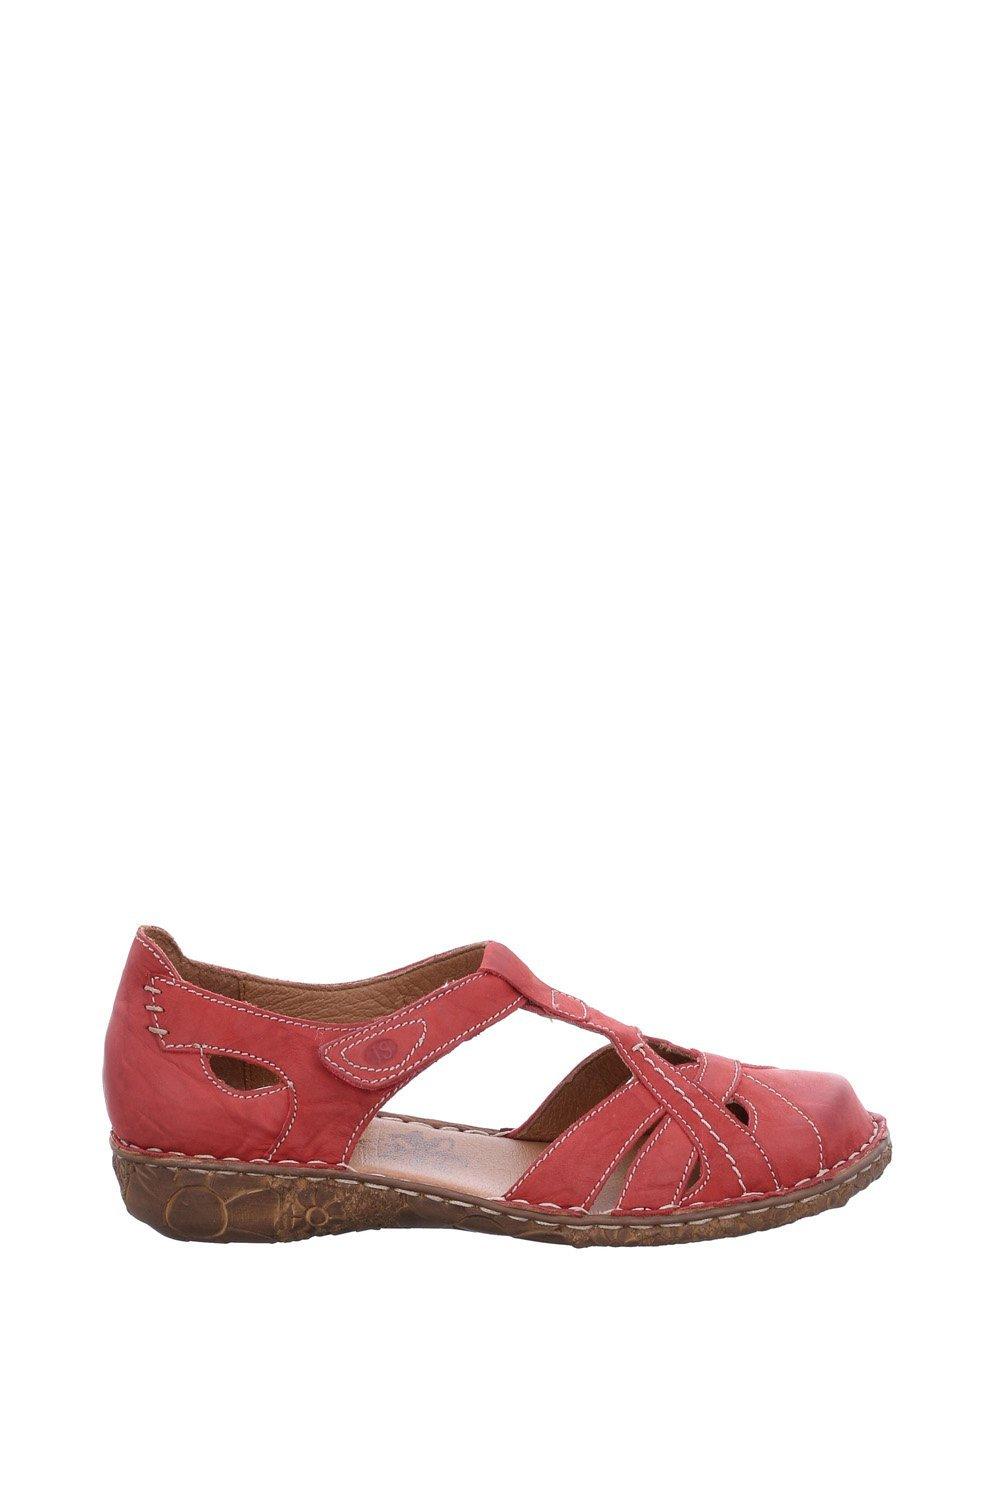 Josef Seibel Women's 'Rosalie 29' Closed Toe Sandals|Size: 4|red